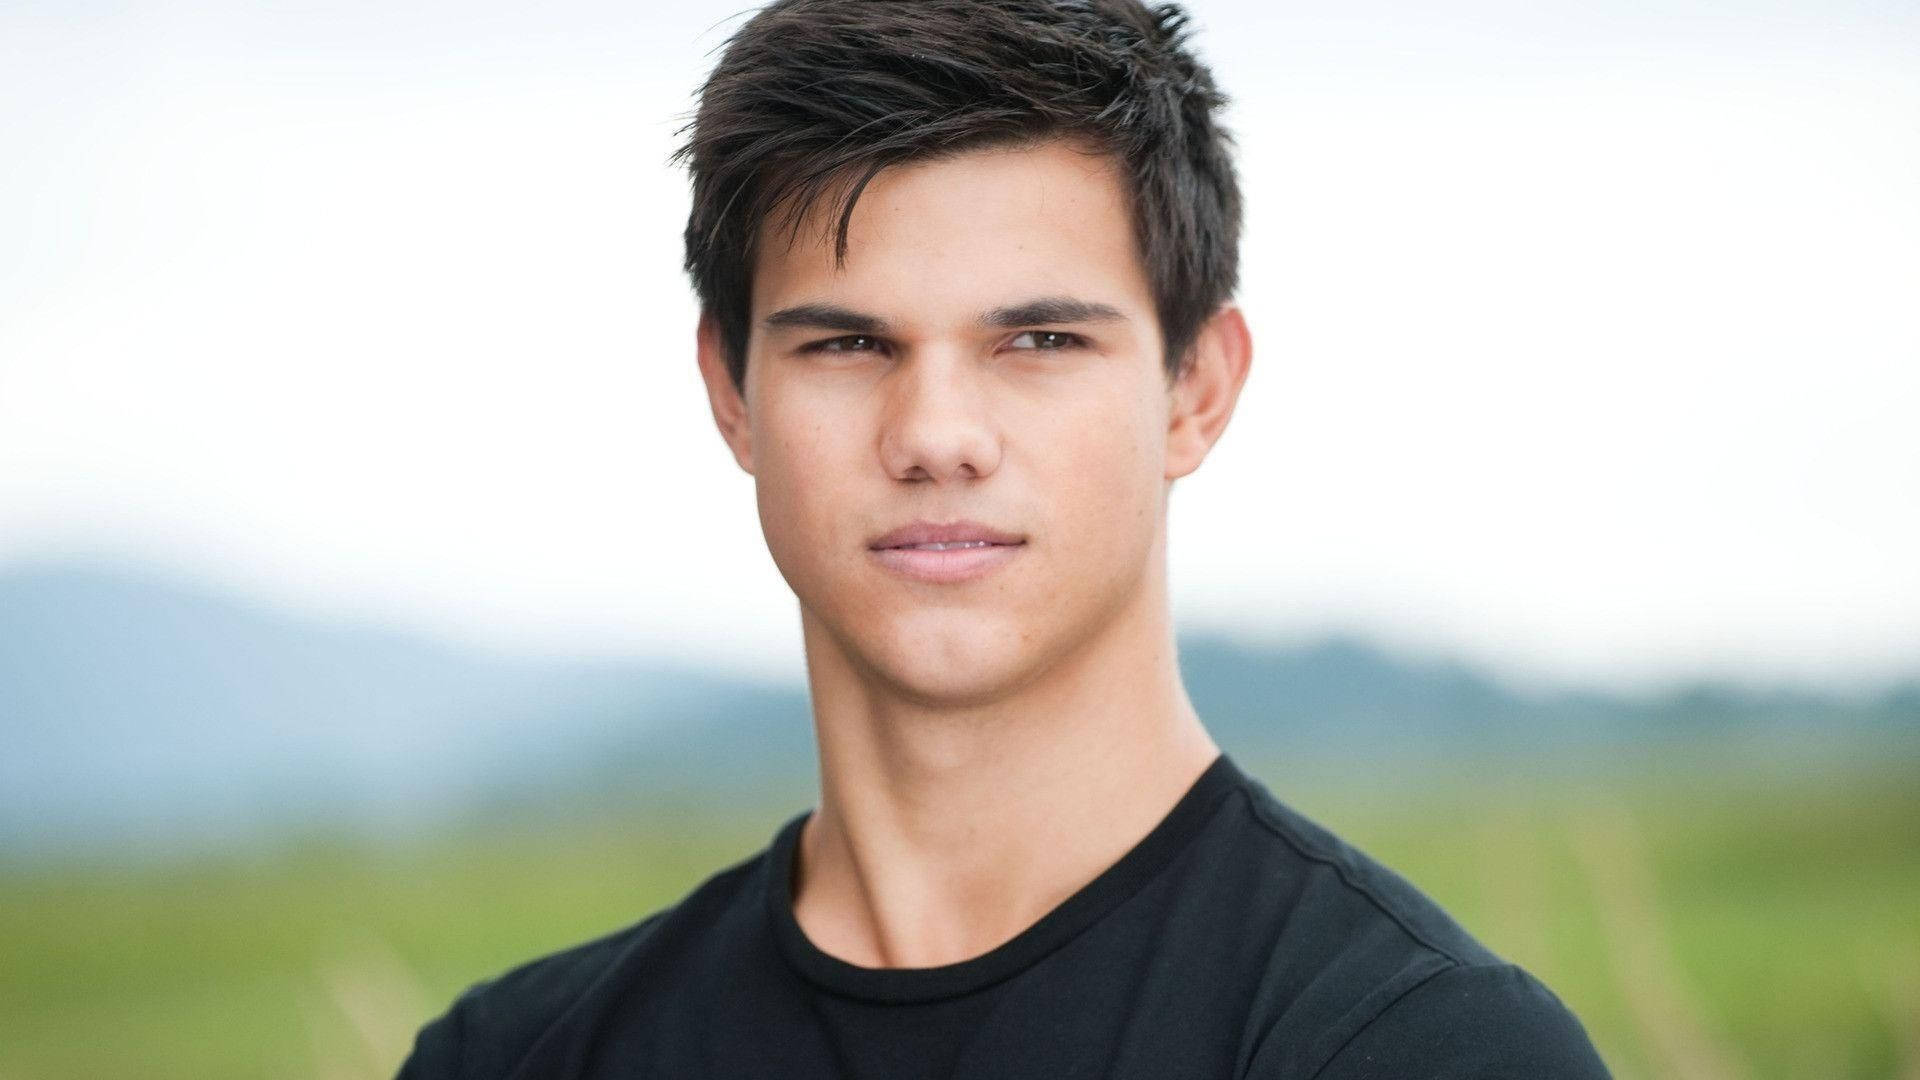 Appealing Actor Taylor Lautner Wallpaper